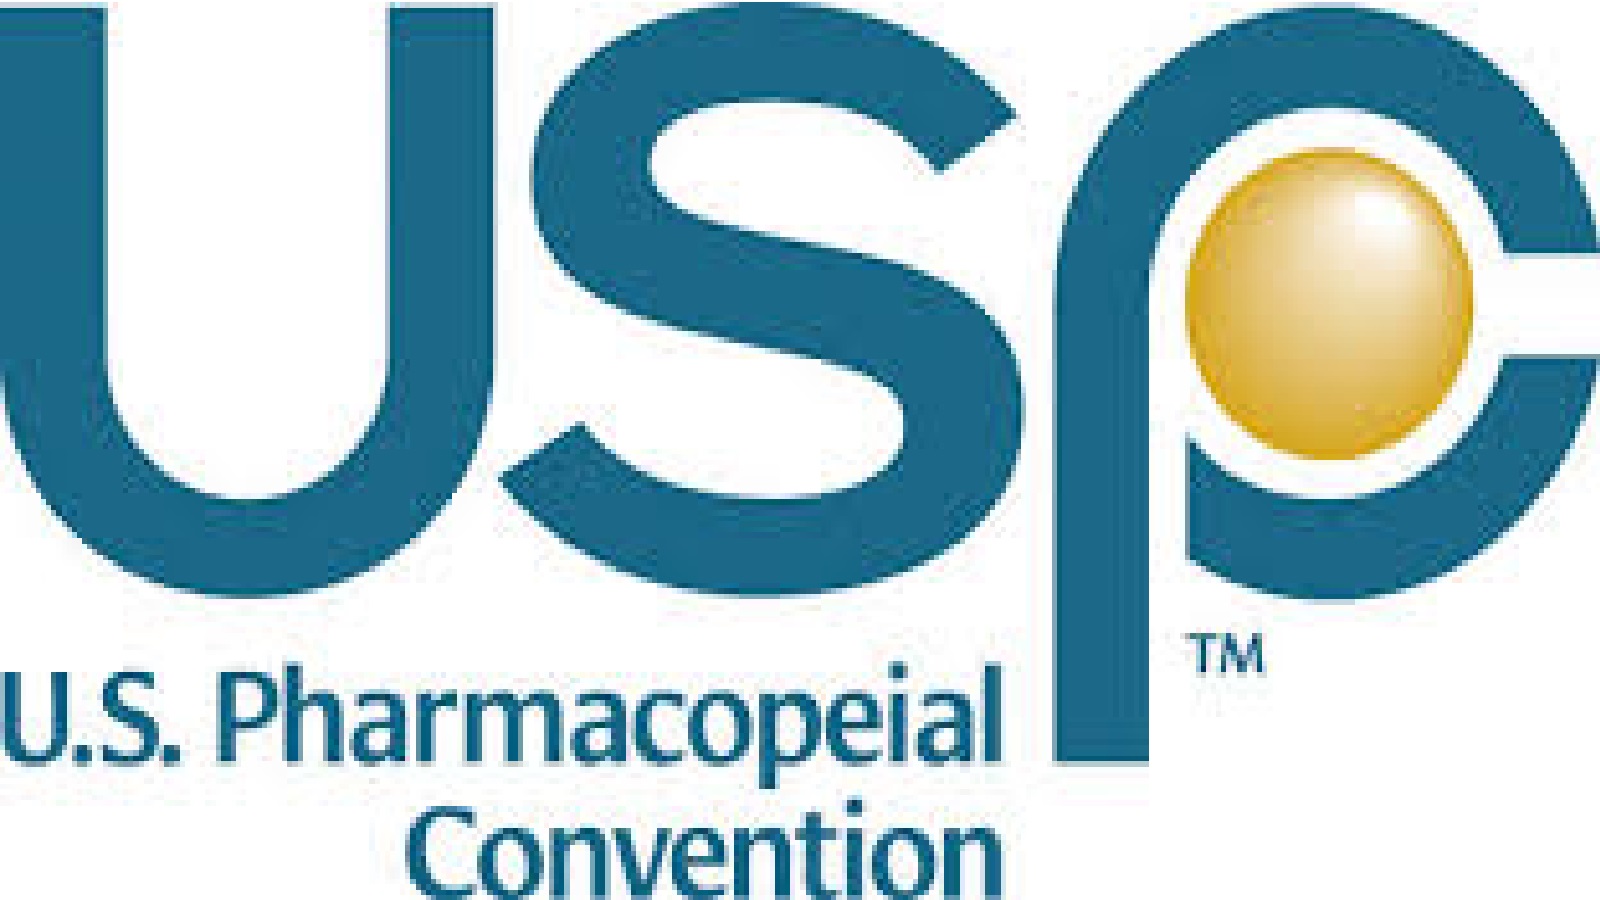 U.S. Pharmacopeial Convention